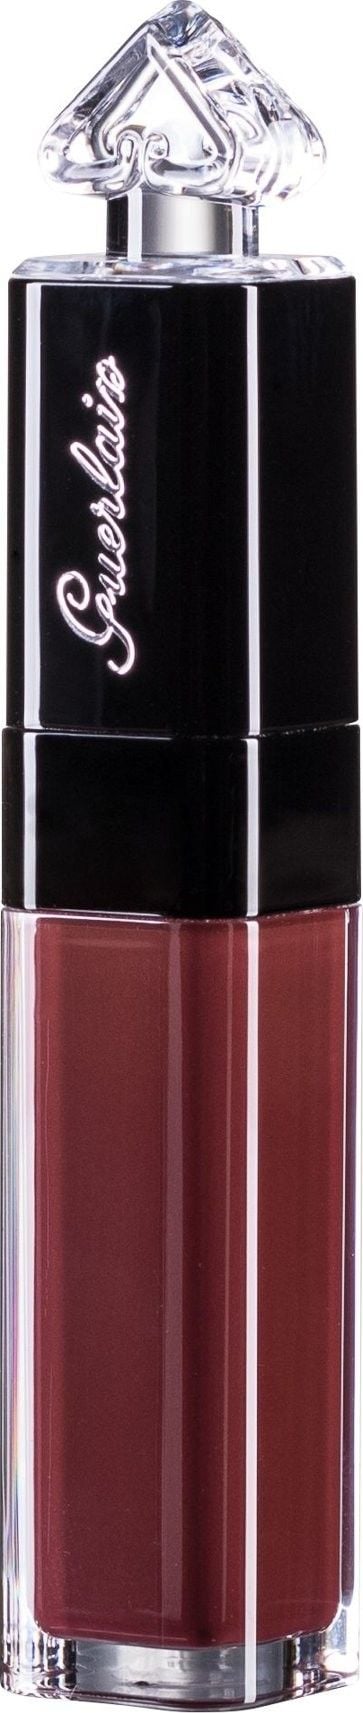 Guerlain La Petite Robe Noire Lip Colour'Ink Pomadka L122 Dark Sided 6ml